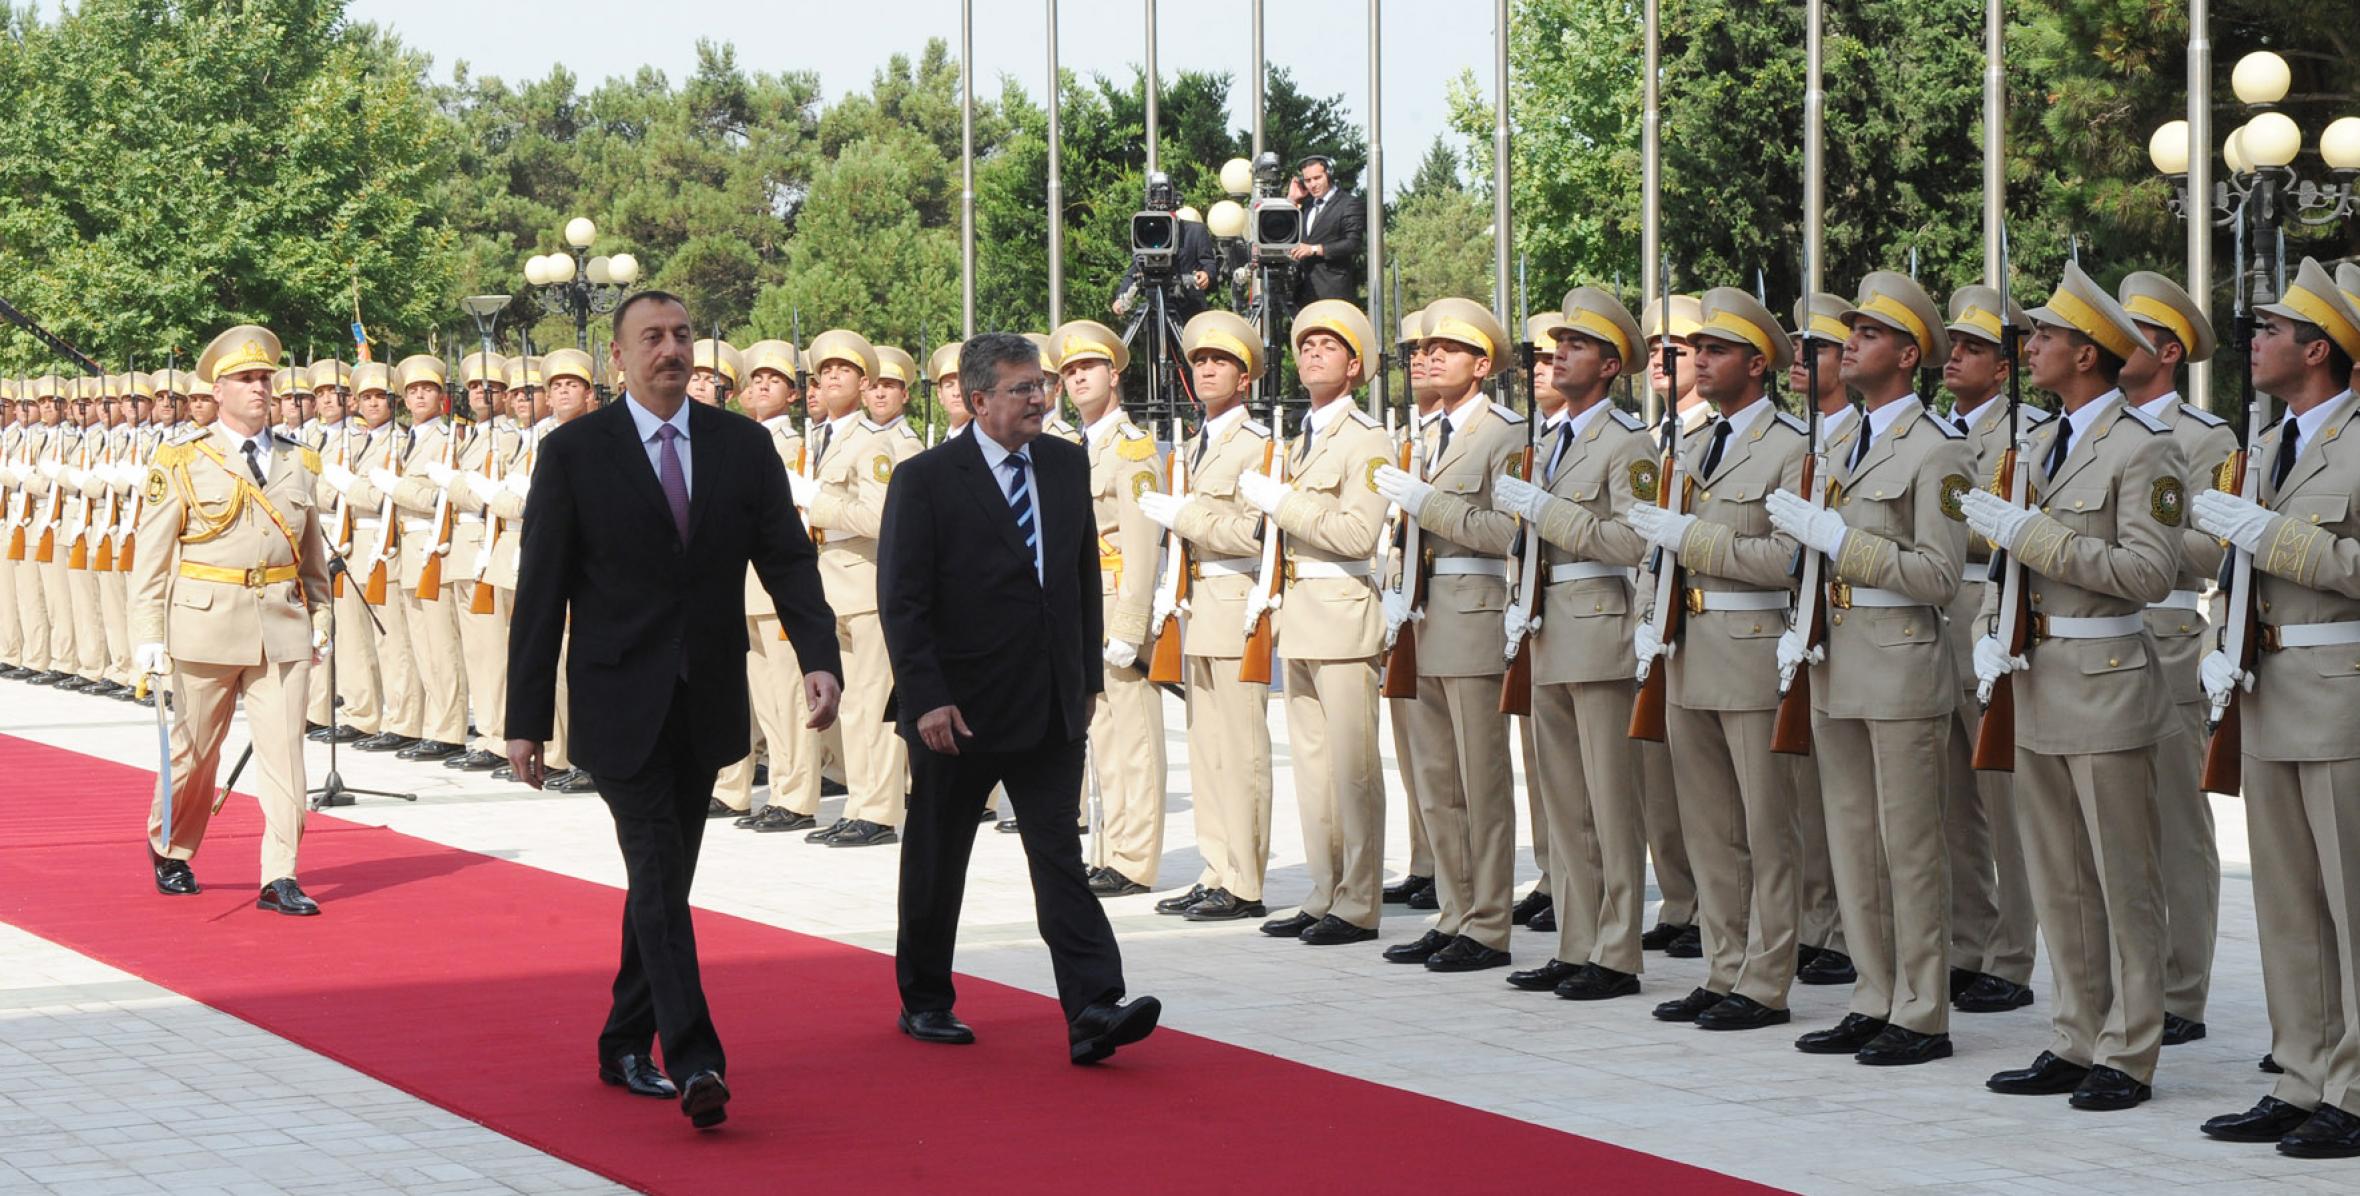 Official welcoming ceremony of Polish President Bronislaw Komorowski was held